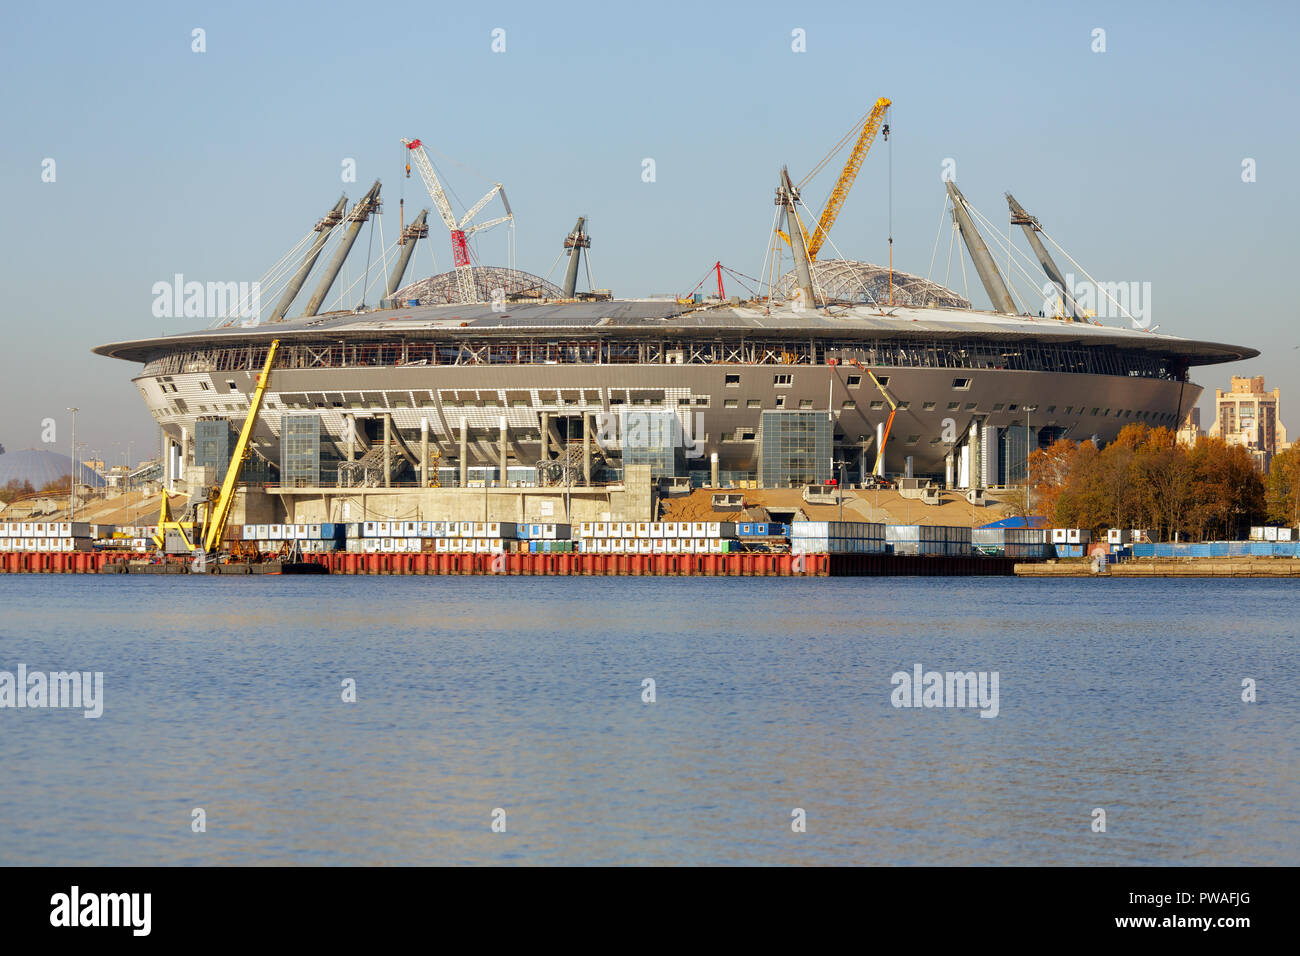 SAINT PETERSBURG, RUSSIA - OCTOBER 13, 2015: Building stadium of local football team Zenit is called Zenith Arena, stadium currently under constructio Stock Photo